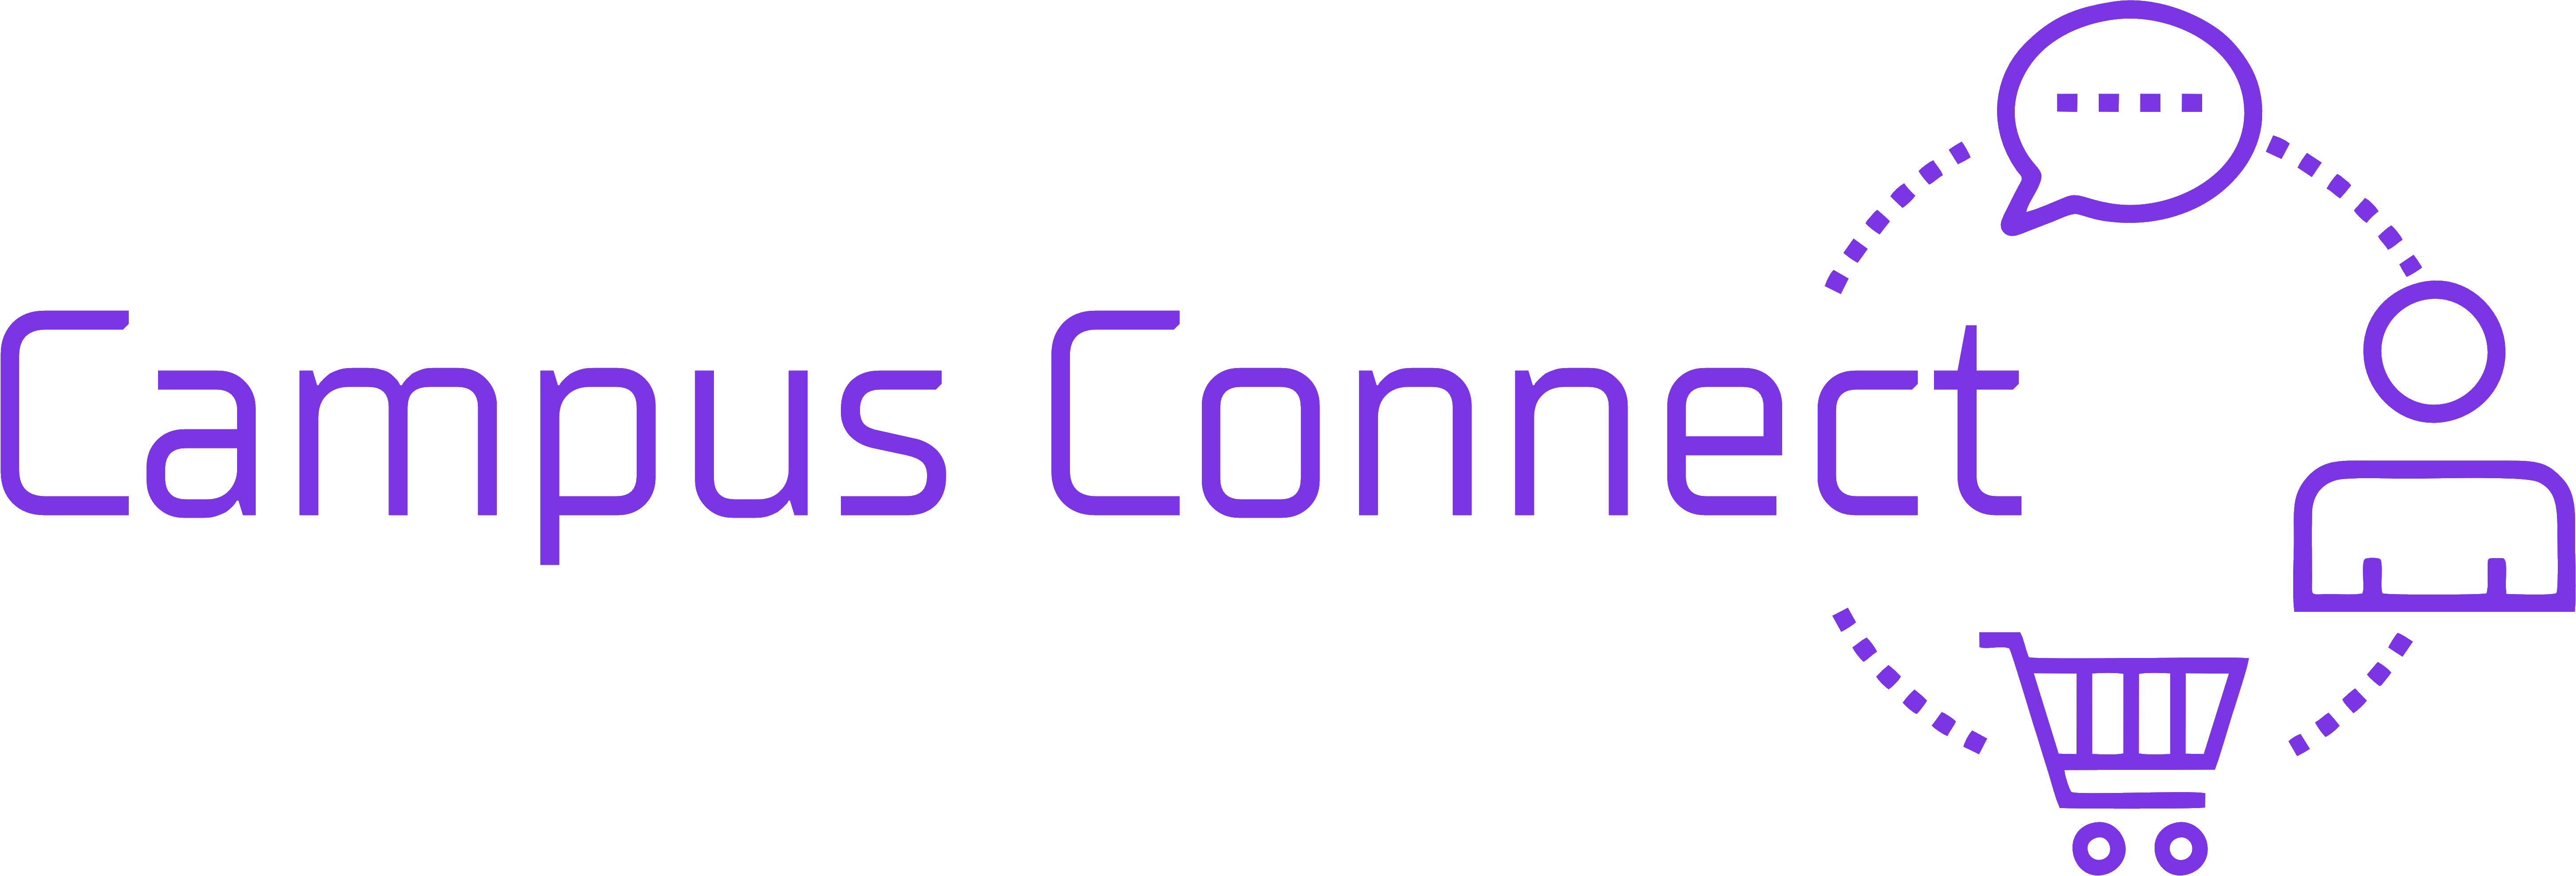 campus connect logo